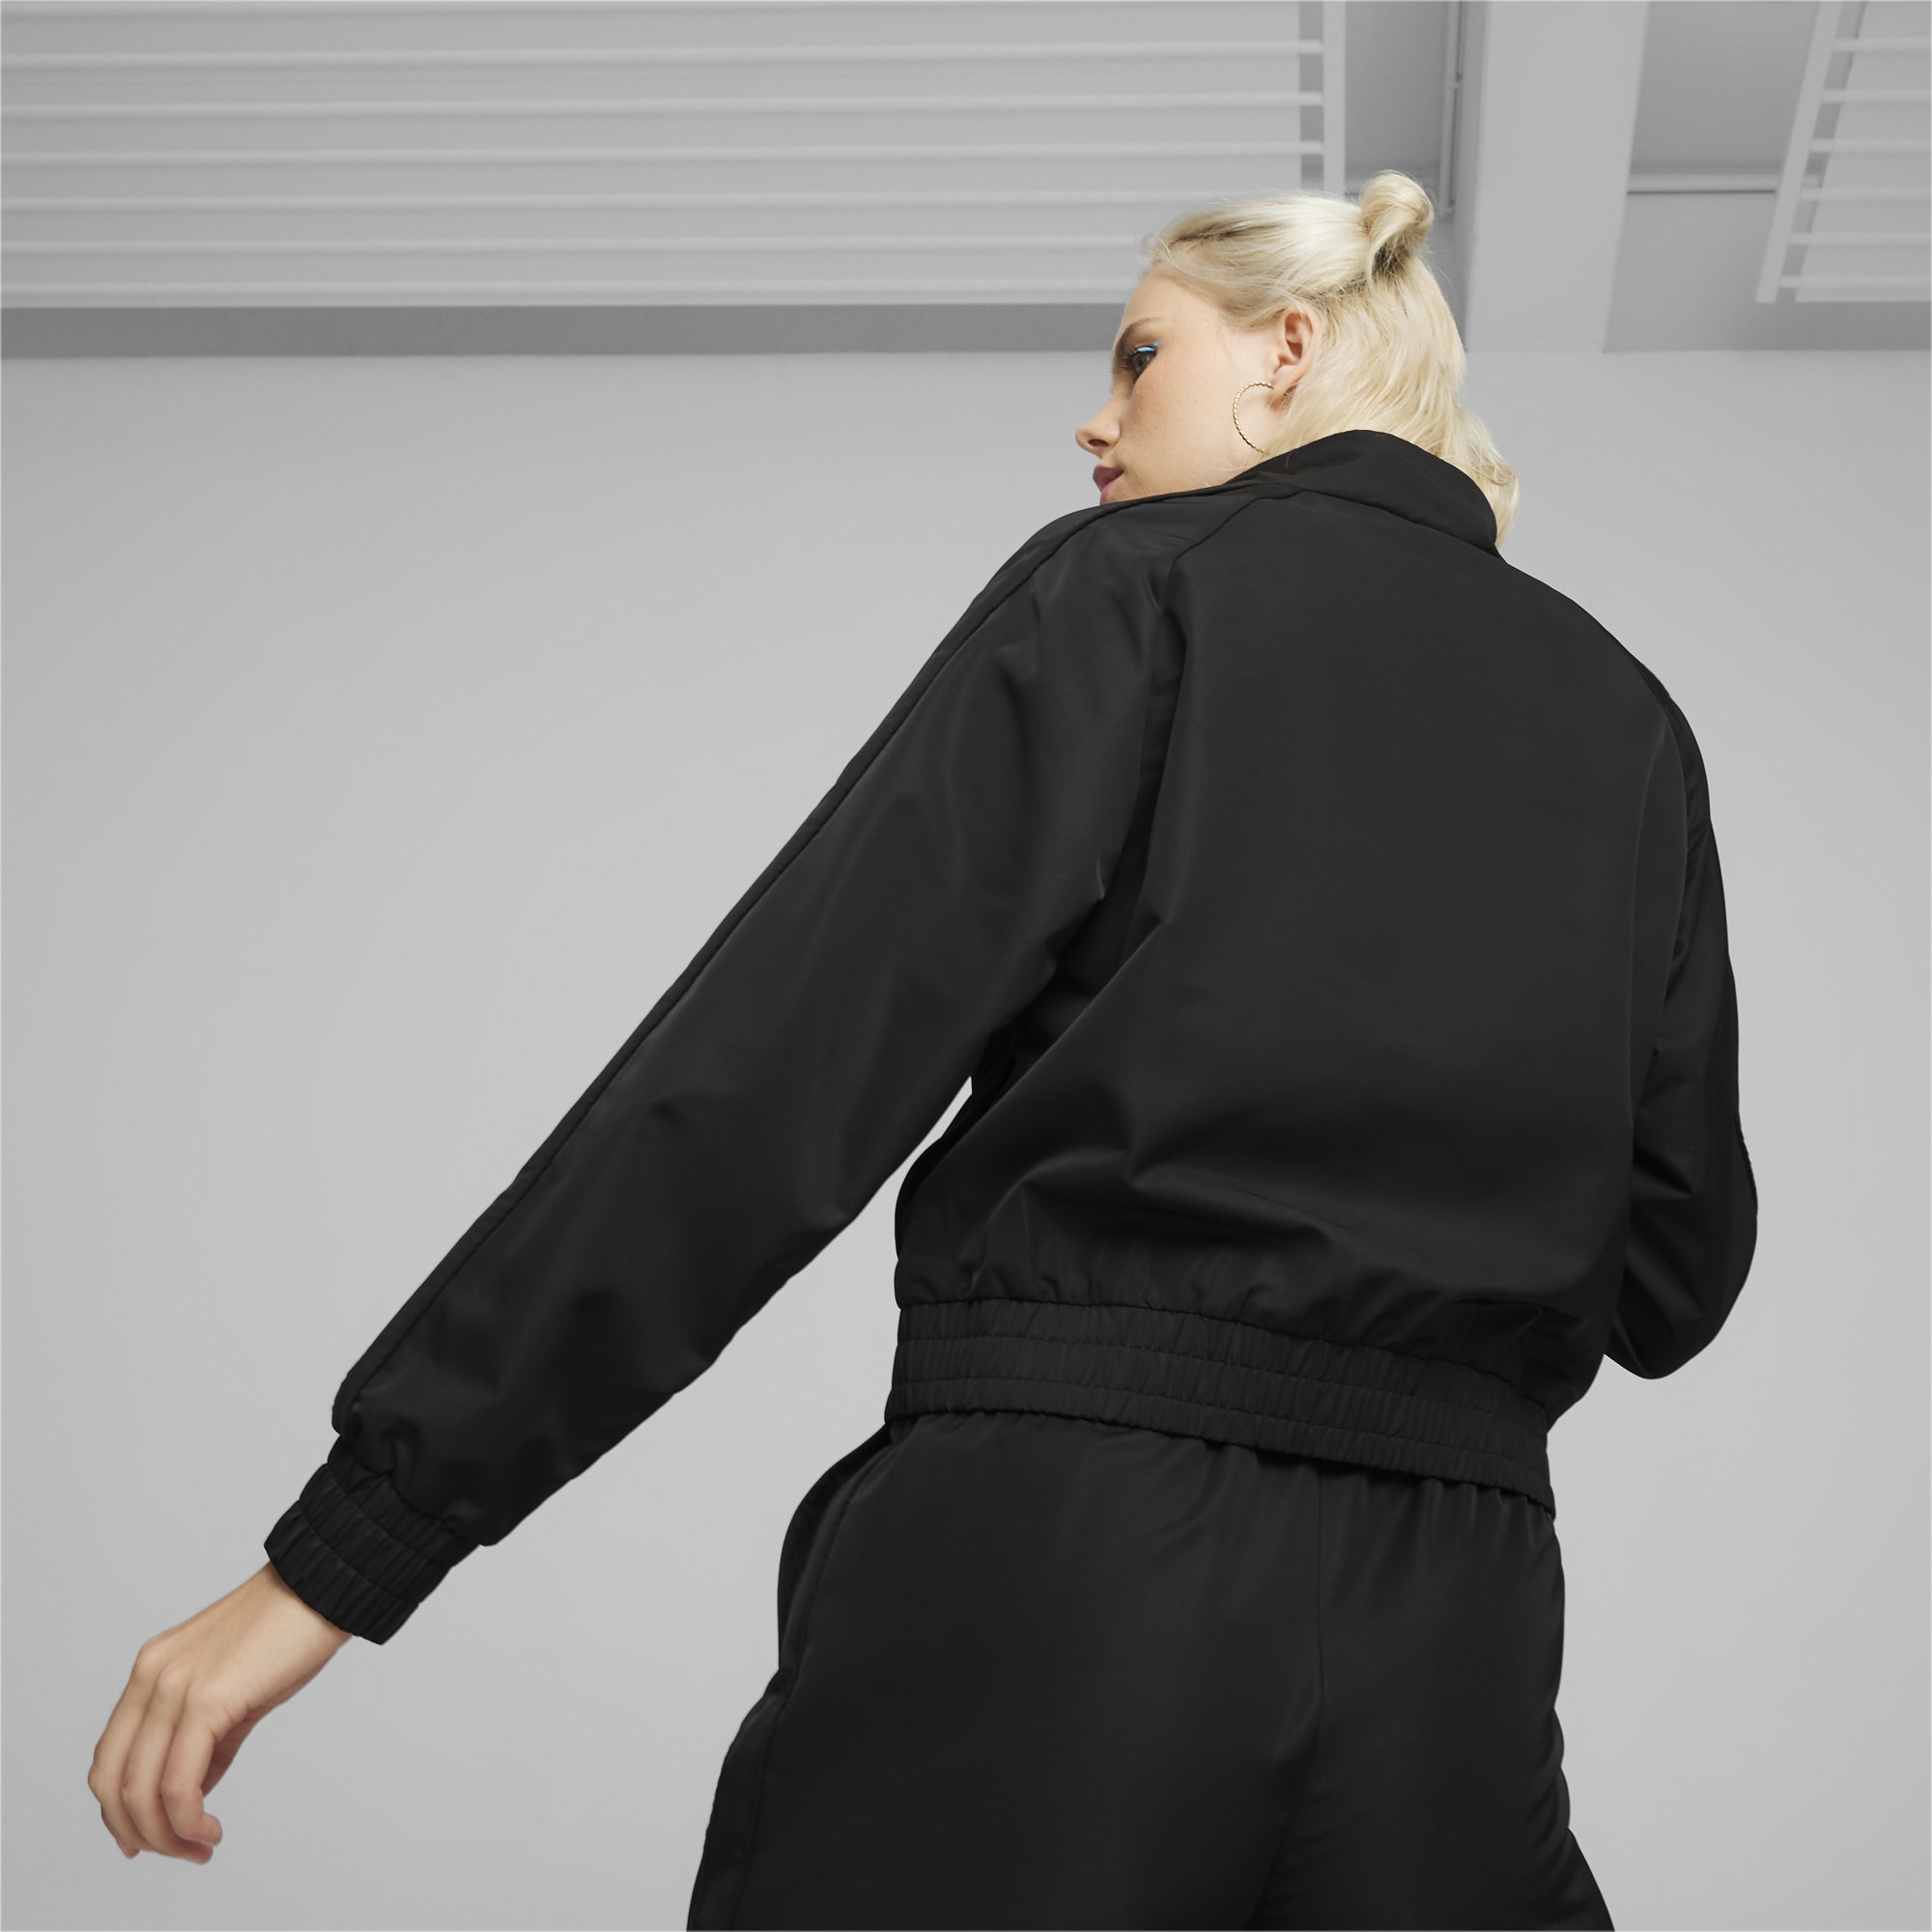 District Concept Store - PUMA T7 Crop Track Women Jacket - Black (533519-01)